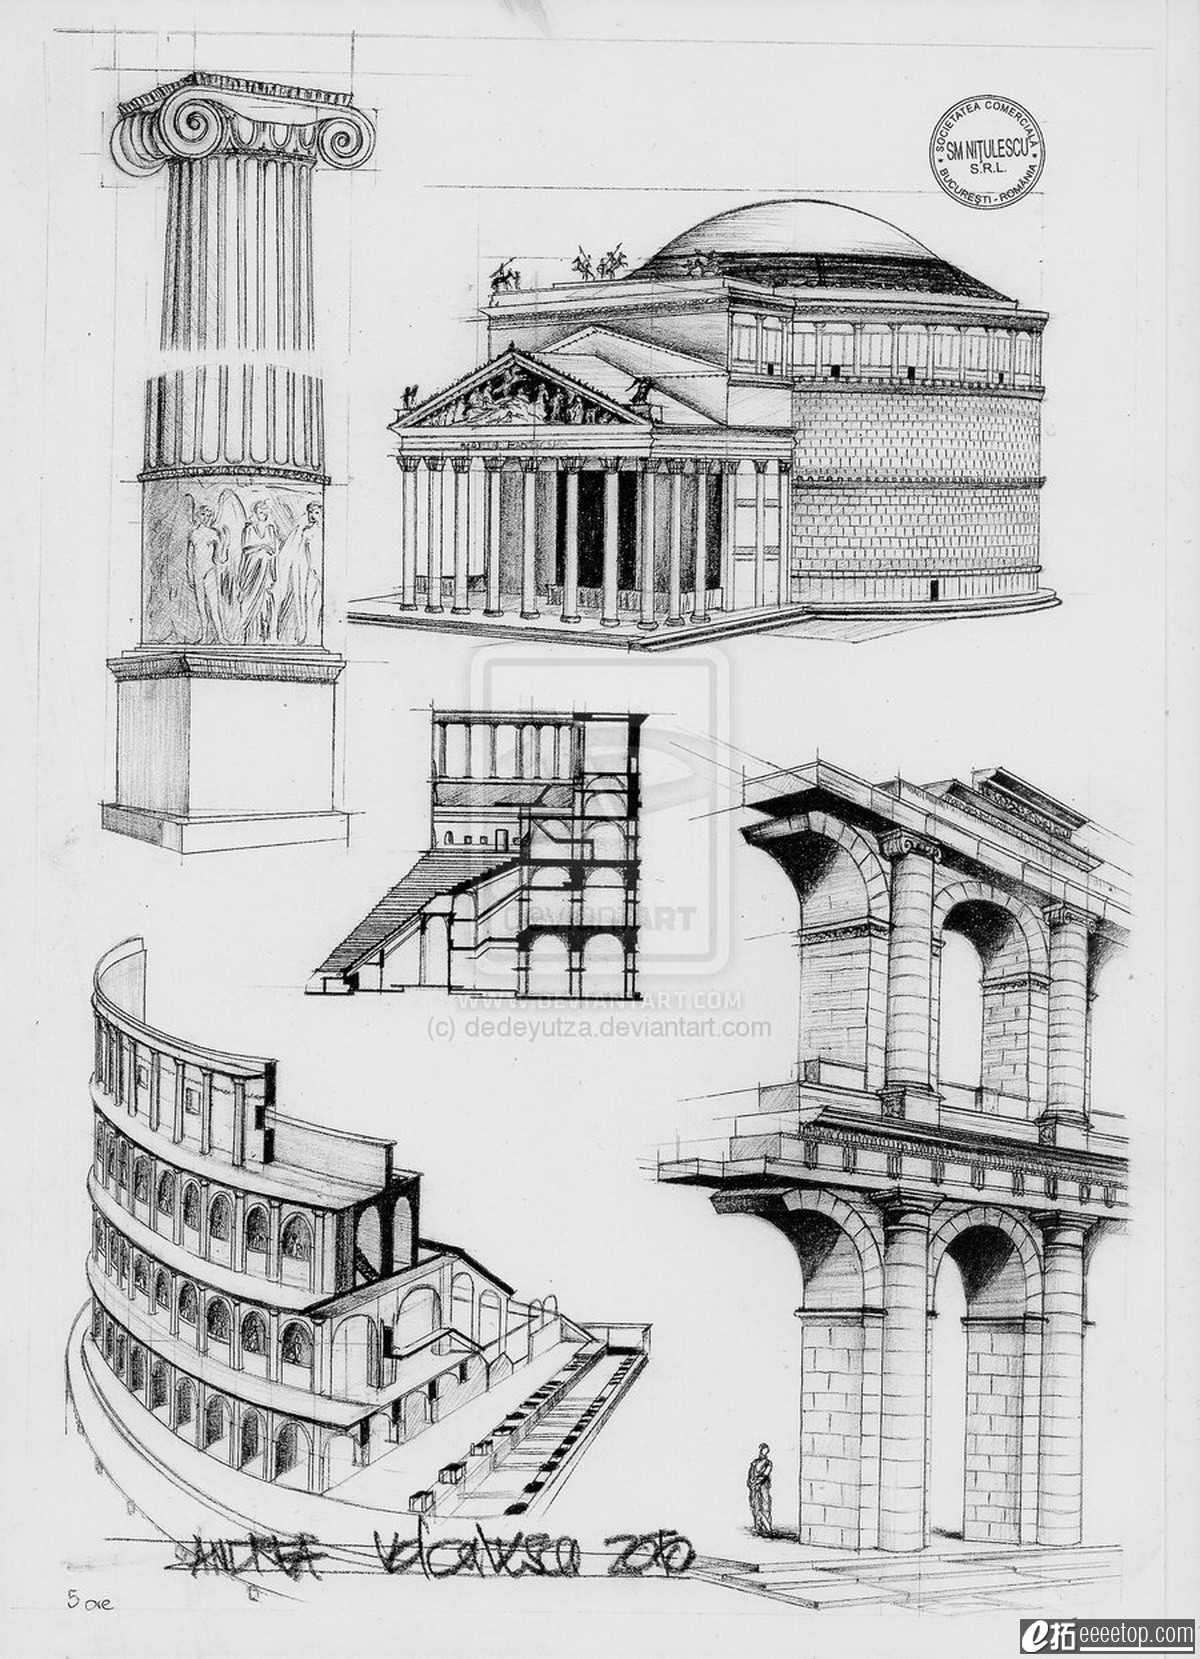 Roman_Architecture_by_dedeyutza_С.jpg